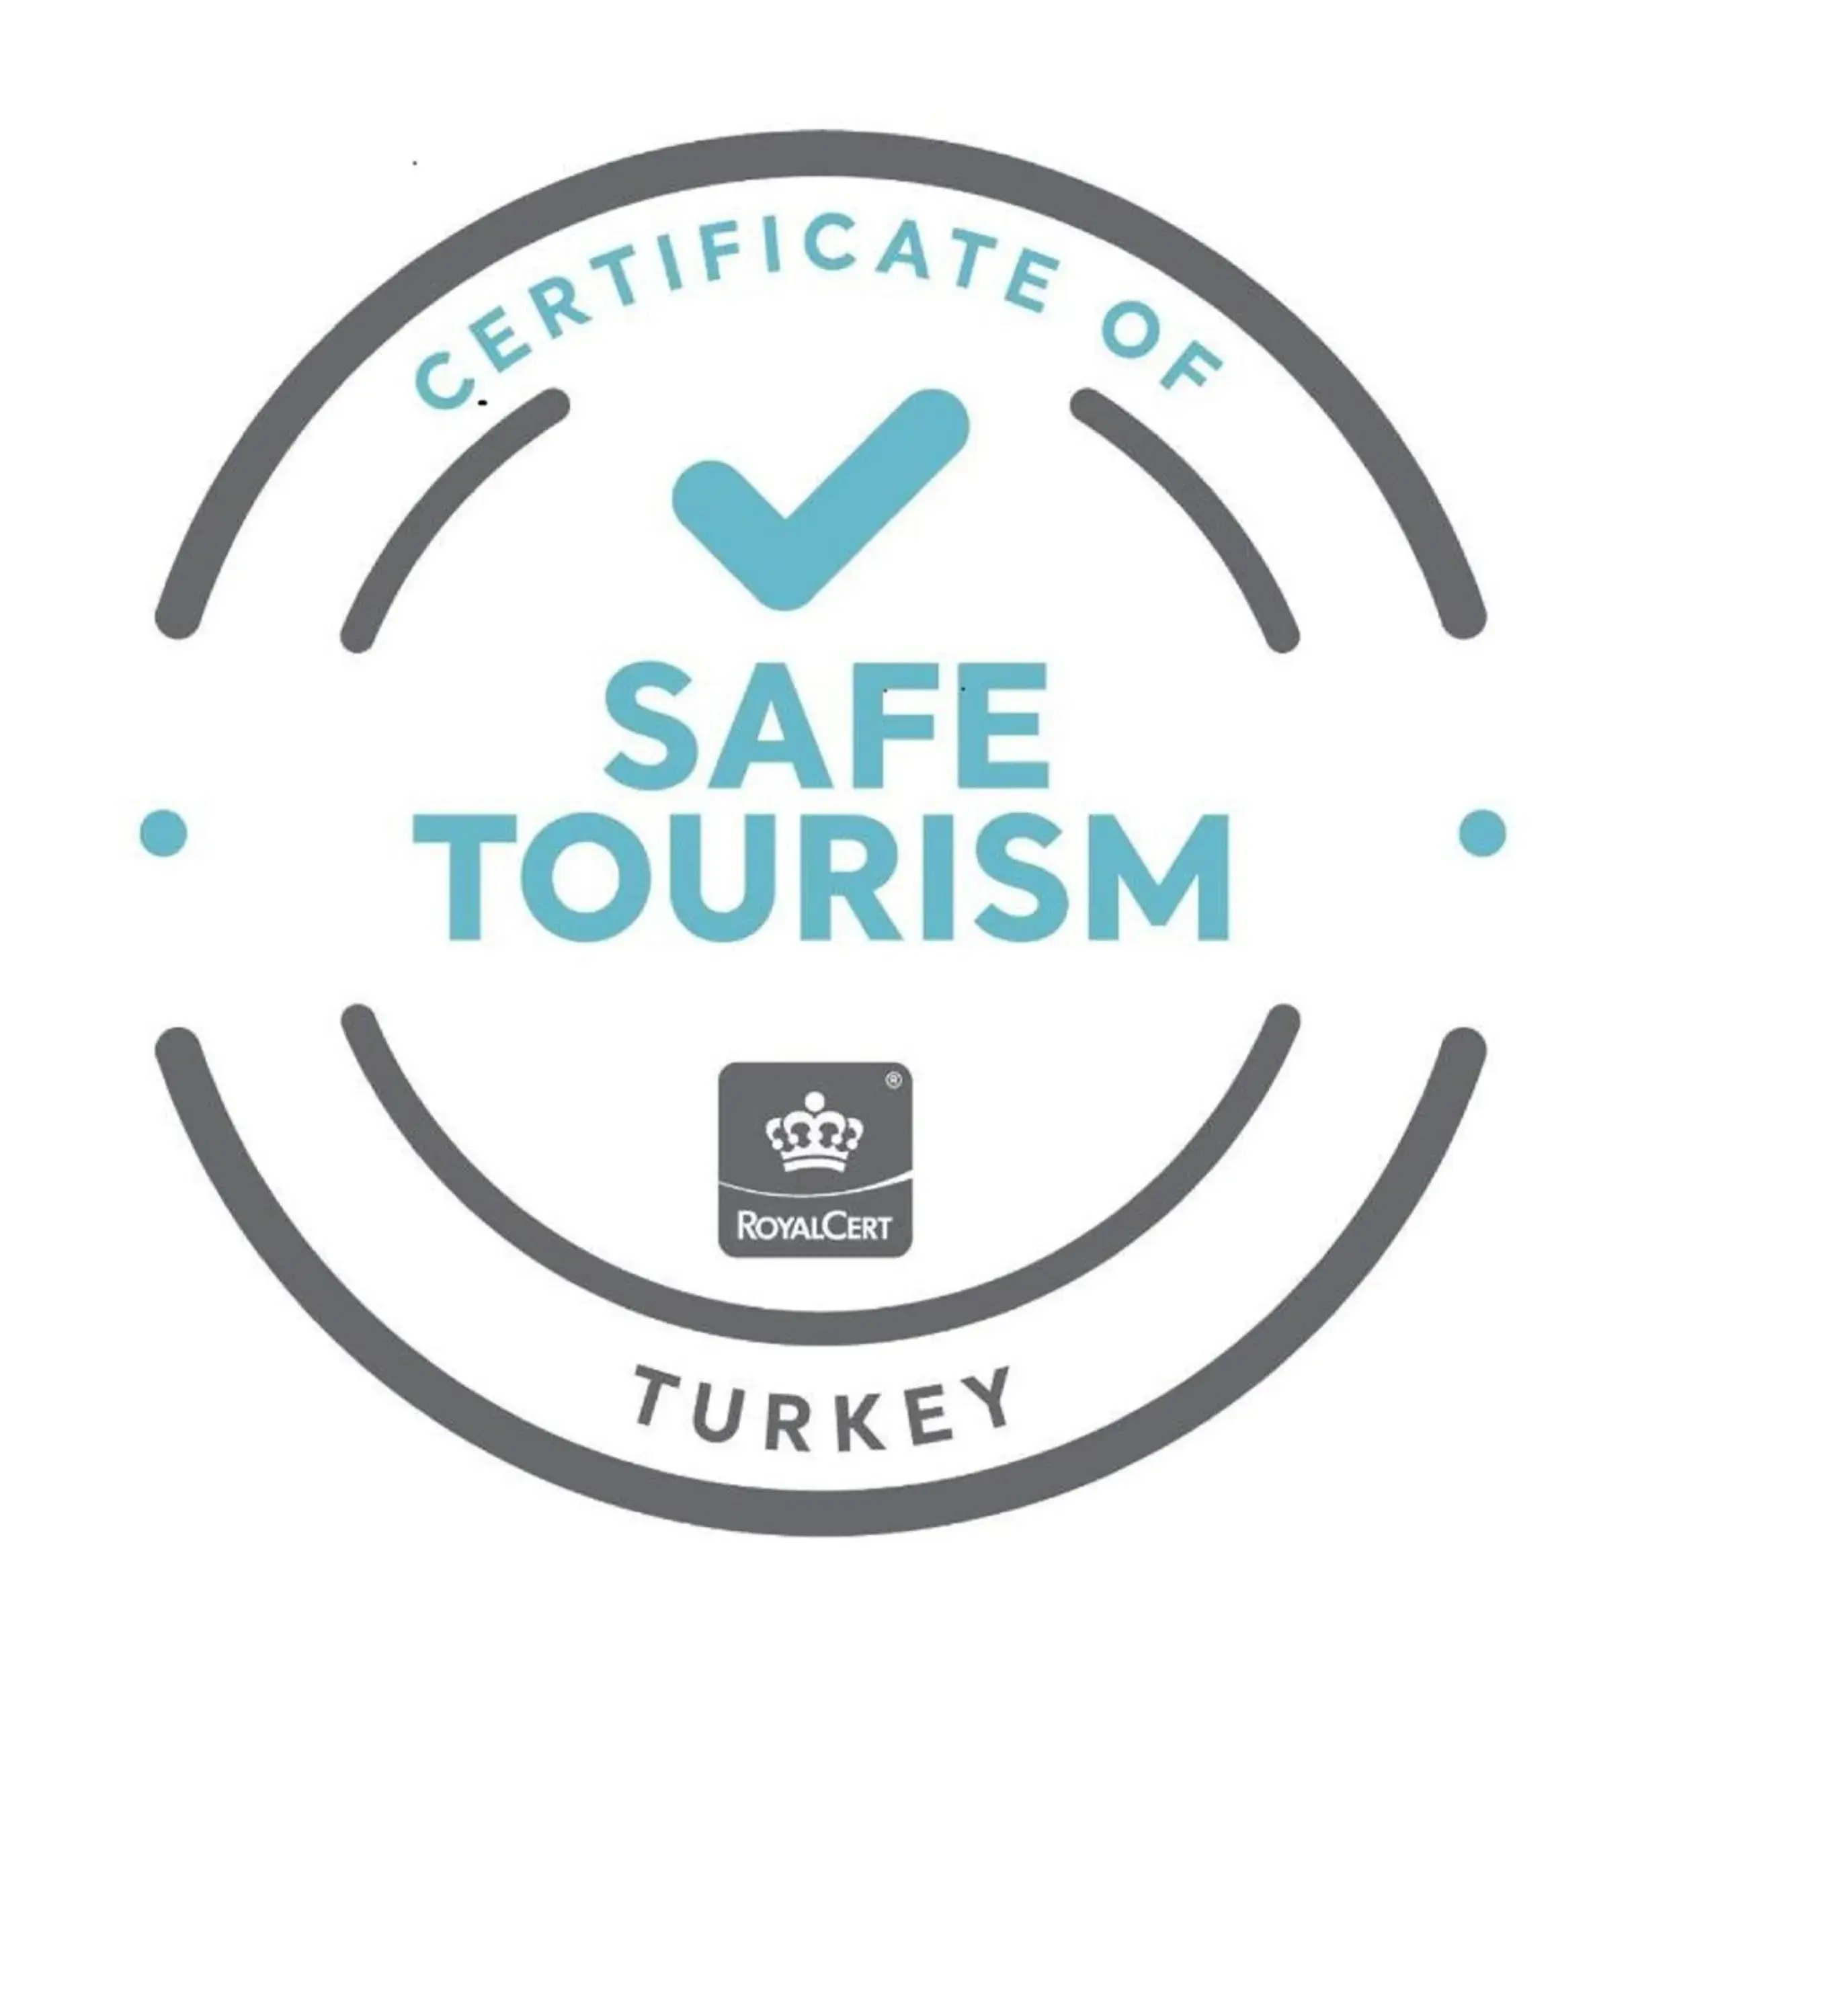 Certificate/Award in Taksim Square Hotel